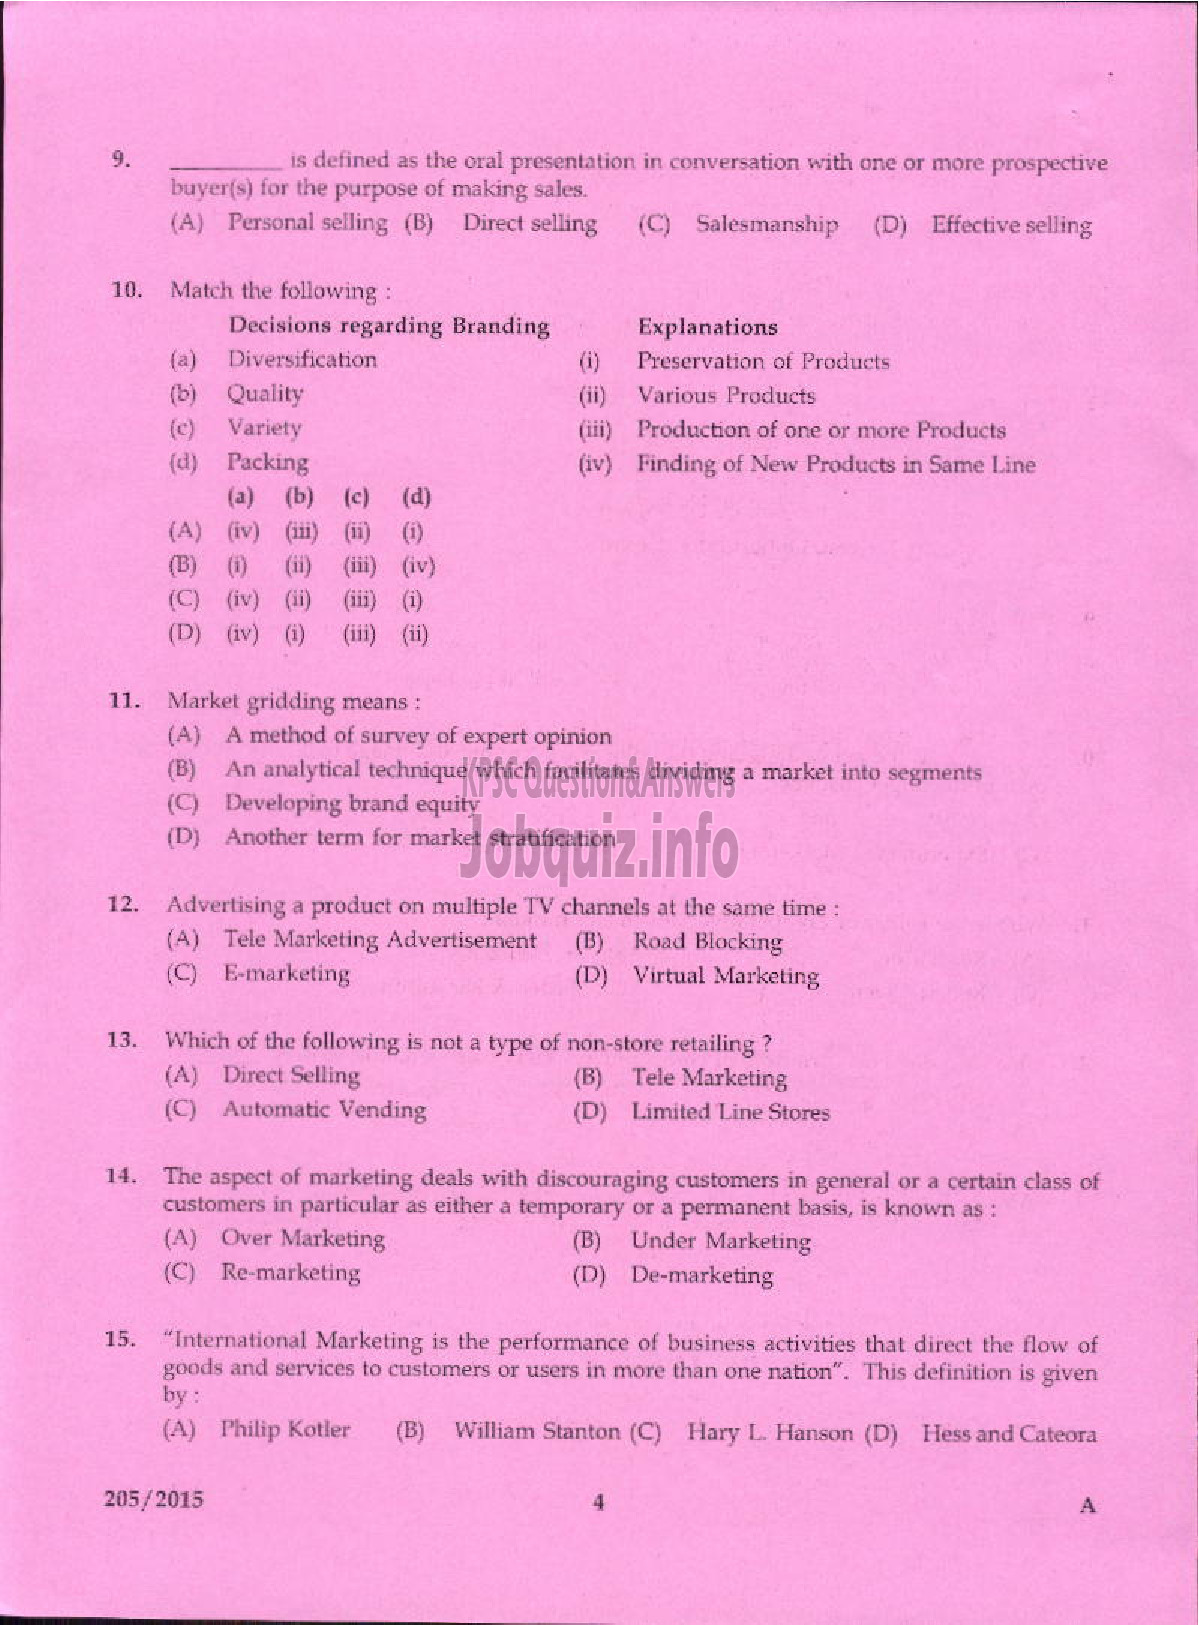 Kerala PSC Question Paper - MARKETING ORGANISER PART I AND PART II KCMMF LTD-2